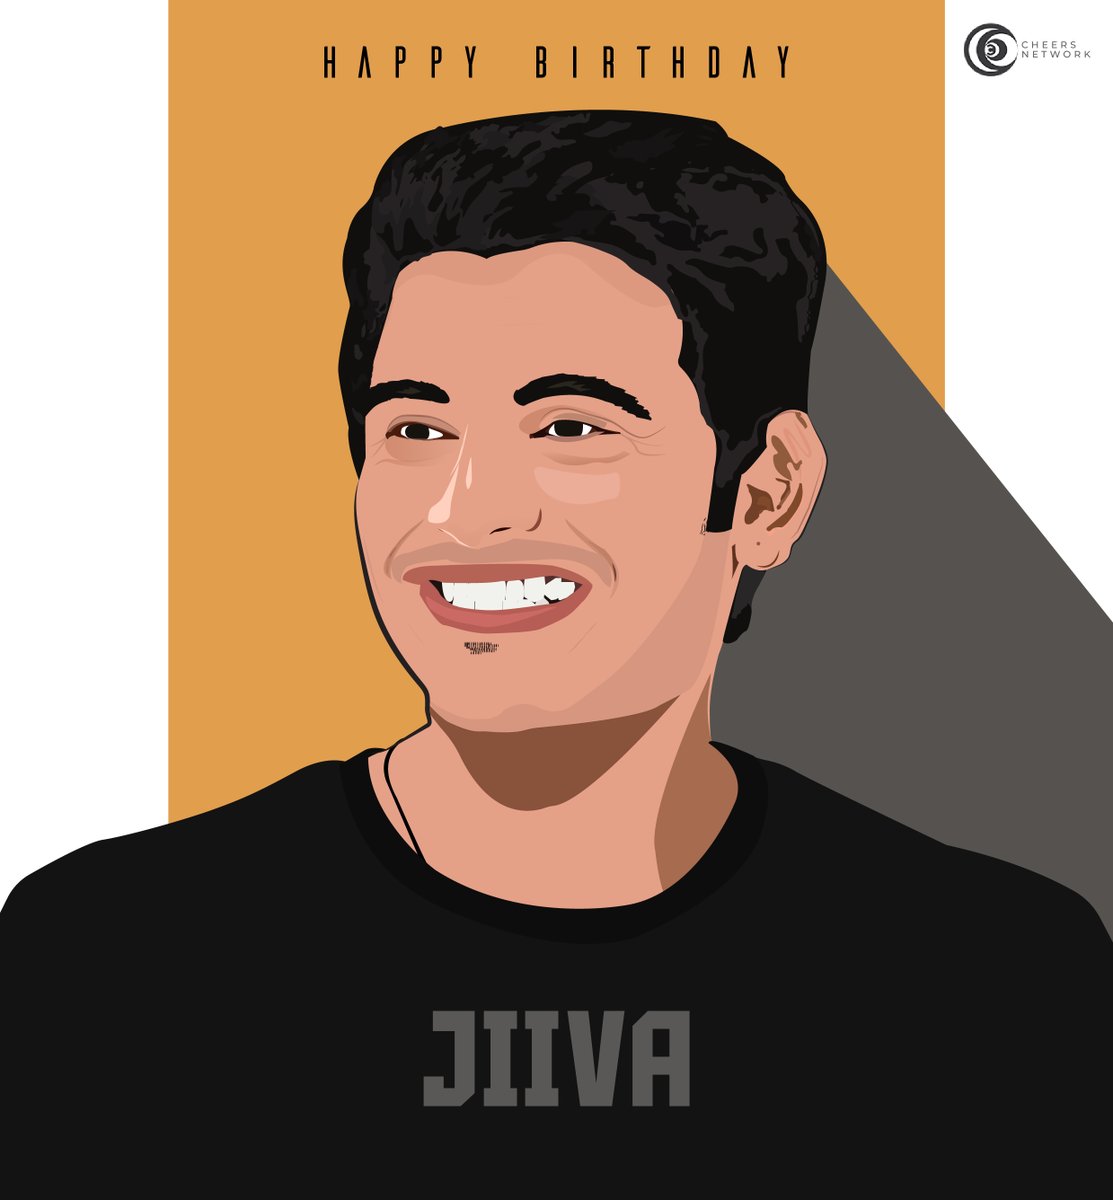 Wishing a Very Happy Birthday Actor'JIIVA'😎
.
@JiivaOfficial
.
#Jiiva #HappyBirthdayJiiva #HBDJiiva #CaptainMilIer #Yatra2 #Yatra2OnFeb8th #jeeva #Mammootty #indianactor #birthdaypost #viralvideos #trendingposts #viral #viralpost #trending #cheersnetwork